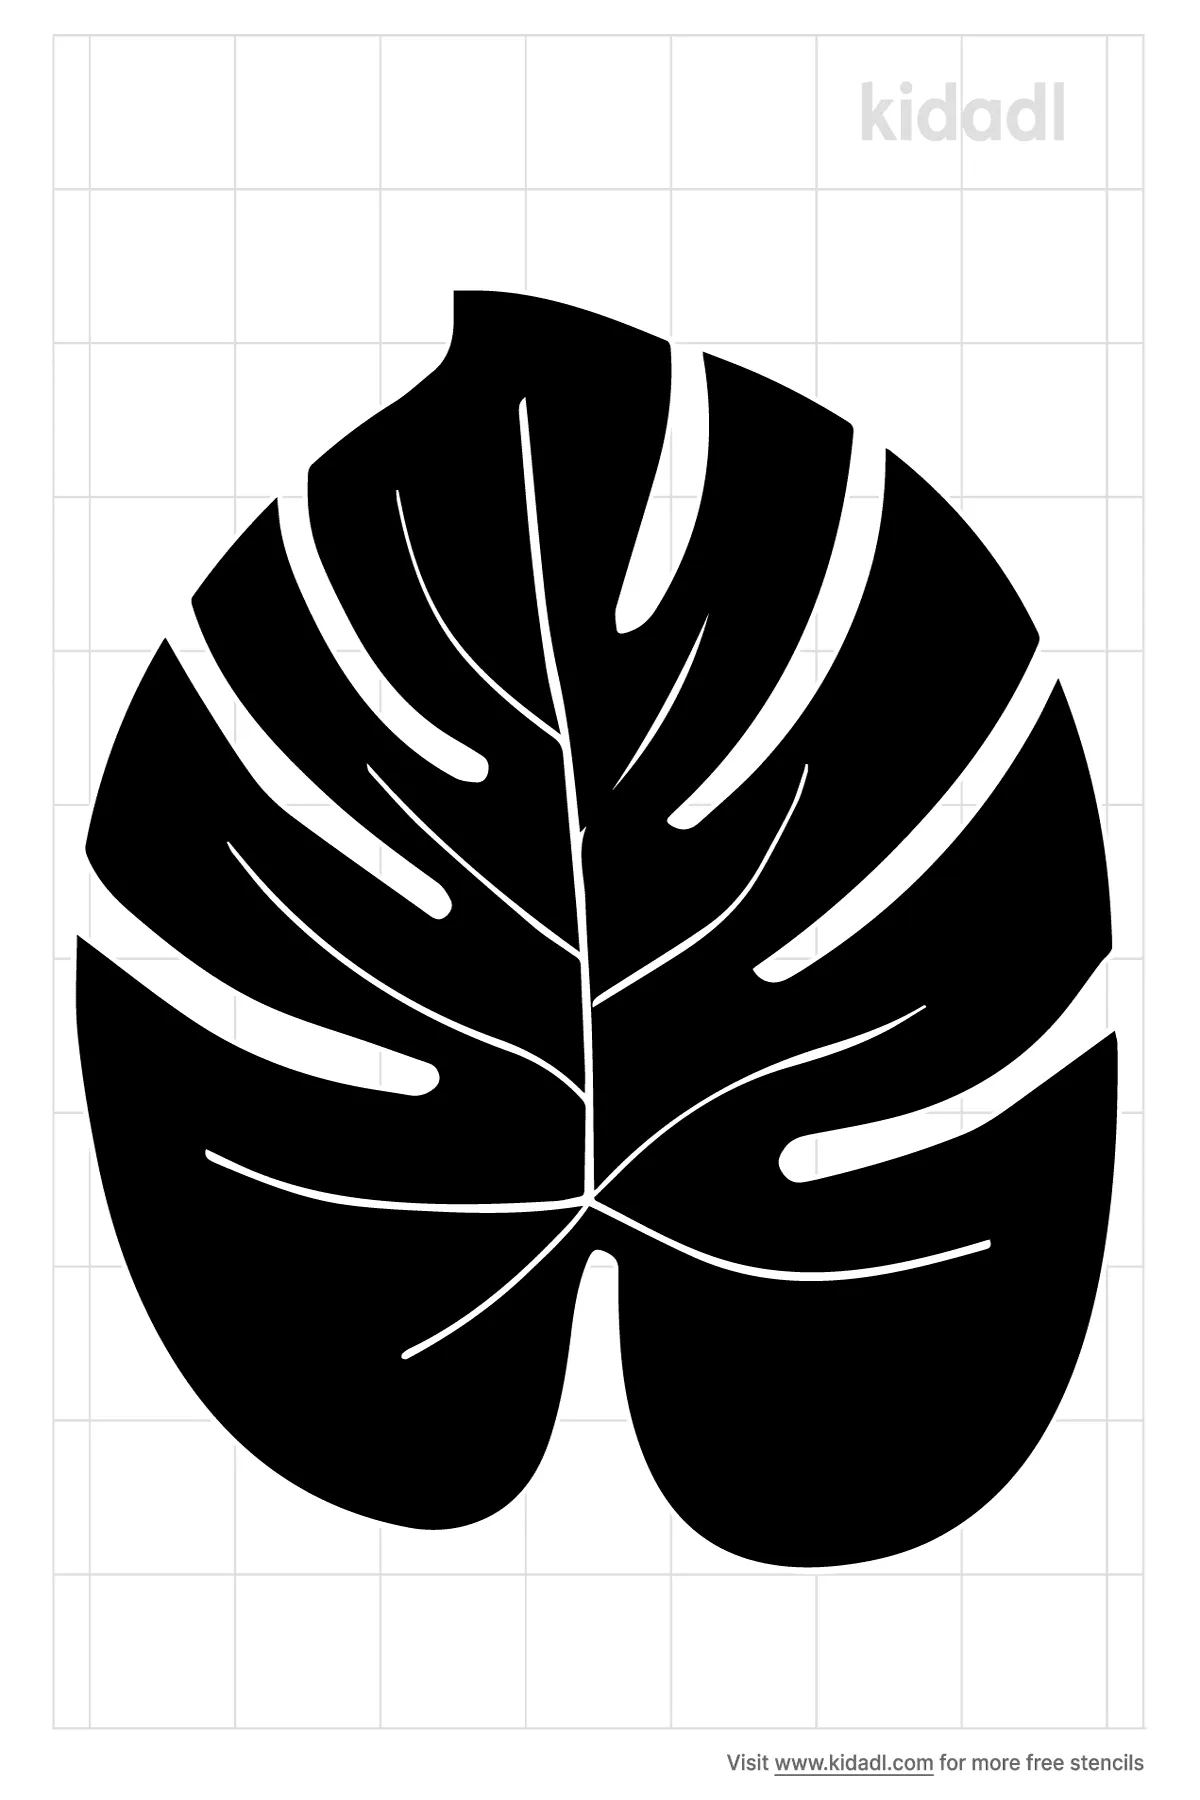 Hawaiian Palm Leaves Stencils Free Printable Plants Stencils Kidadl And Plants Stencils Free Printable Stencils Kidadl